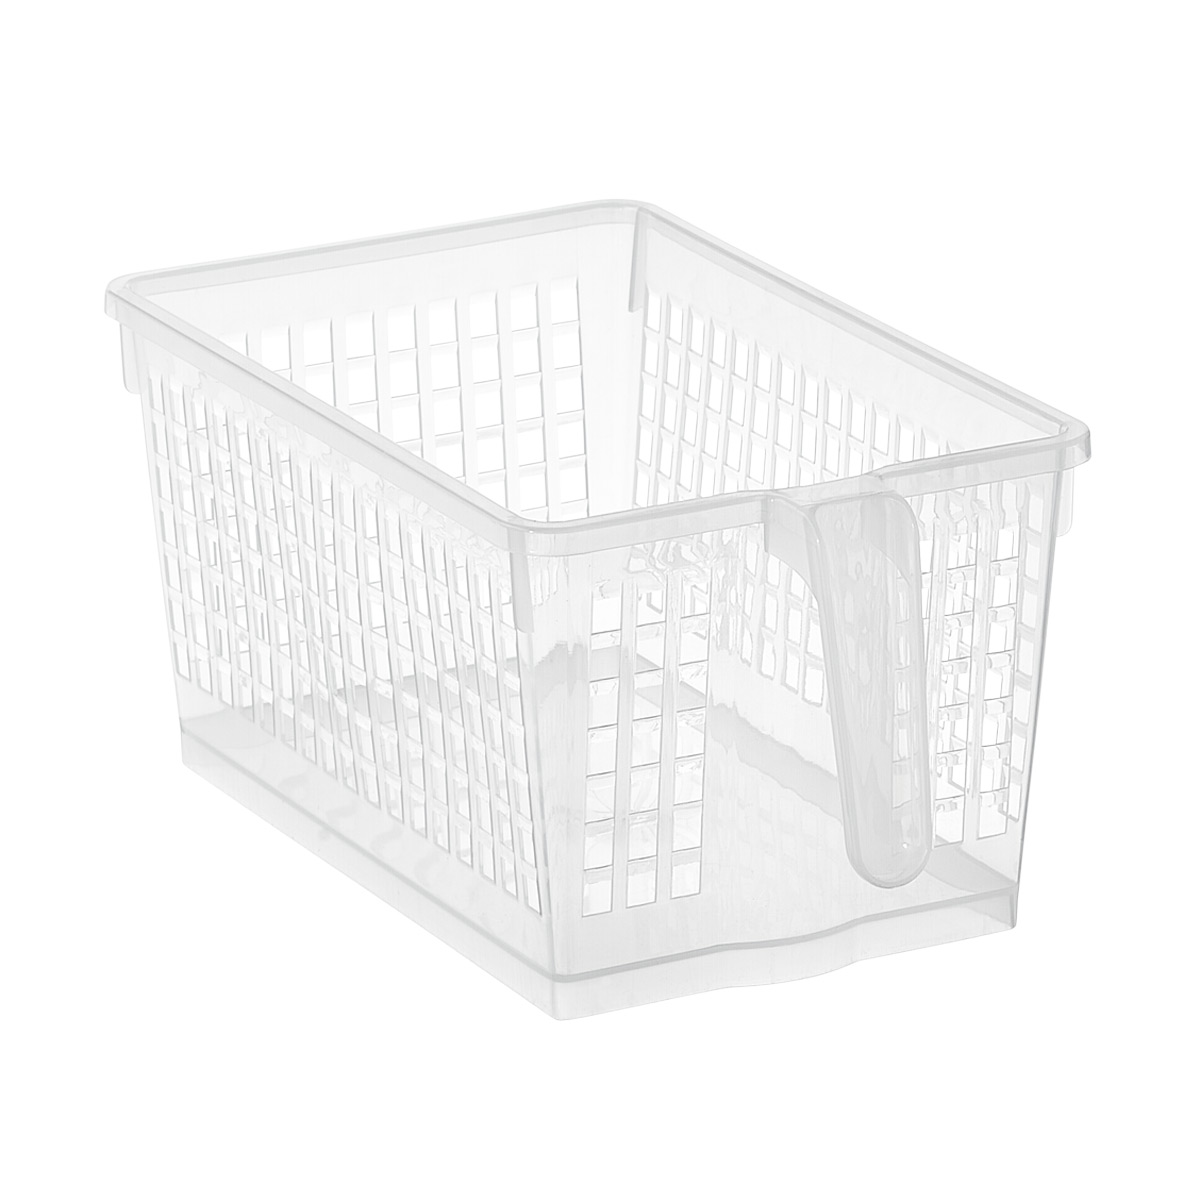 Handy Basket Pantry Organizer Clear